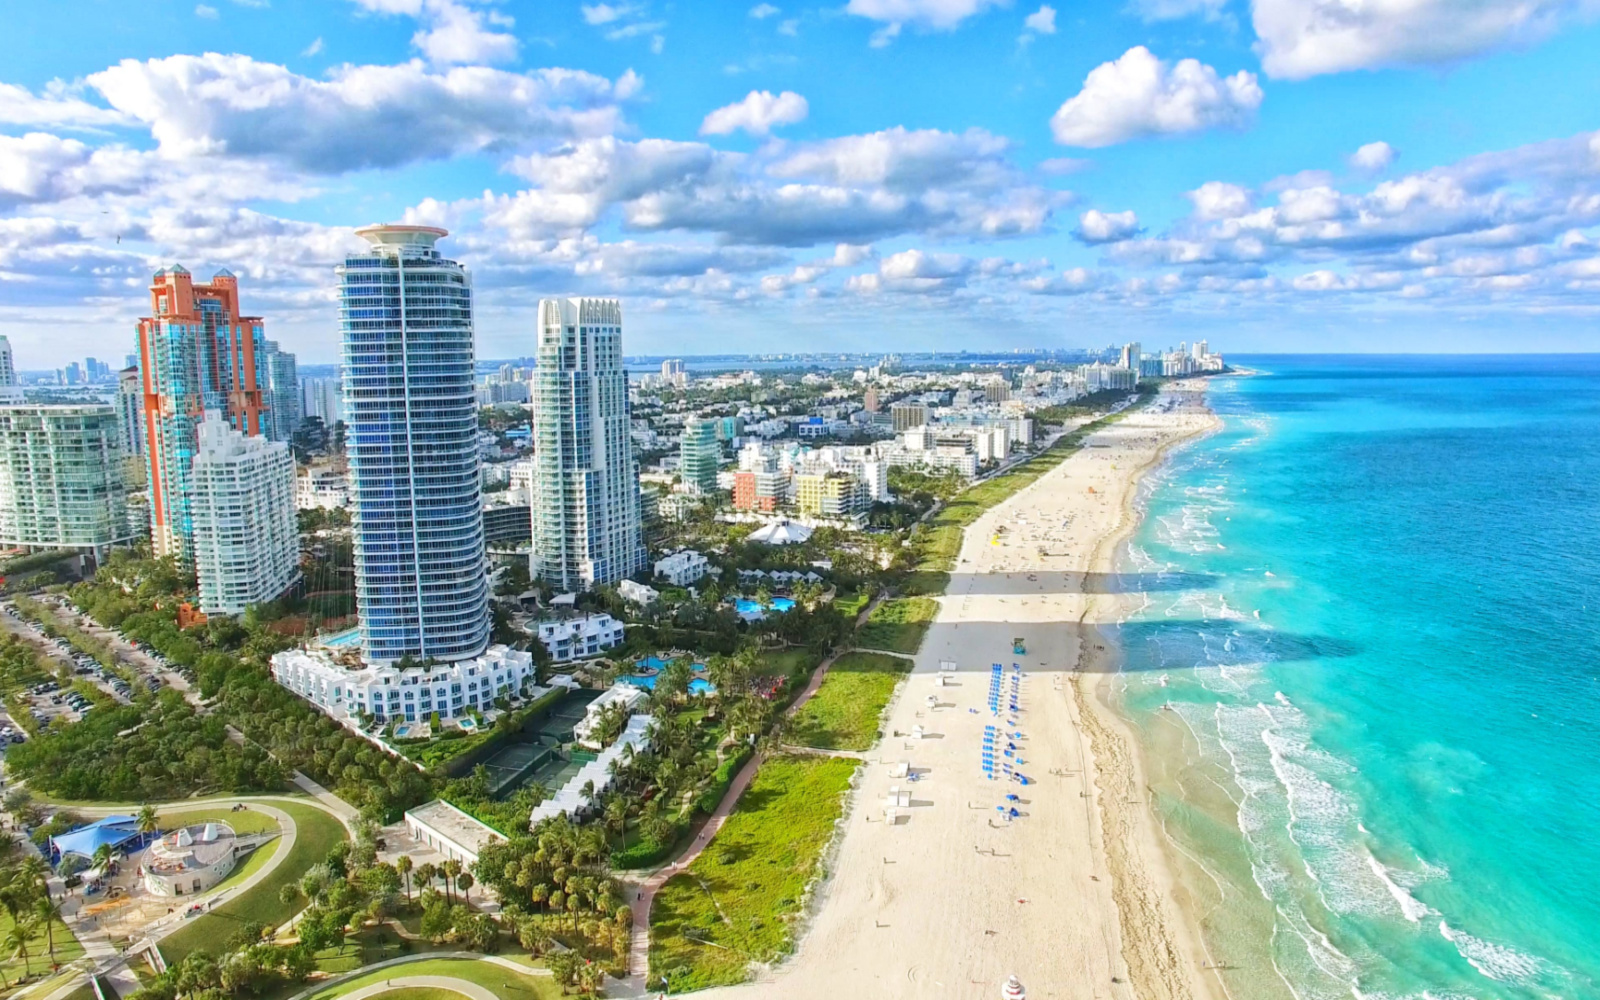 Is Florida Safe in 2022? | Travel Tips & Safety Concerns